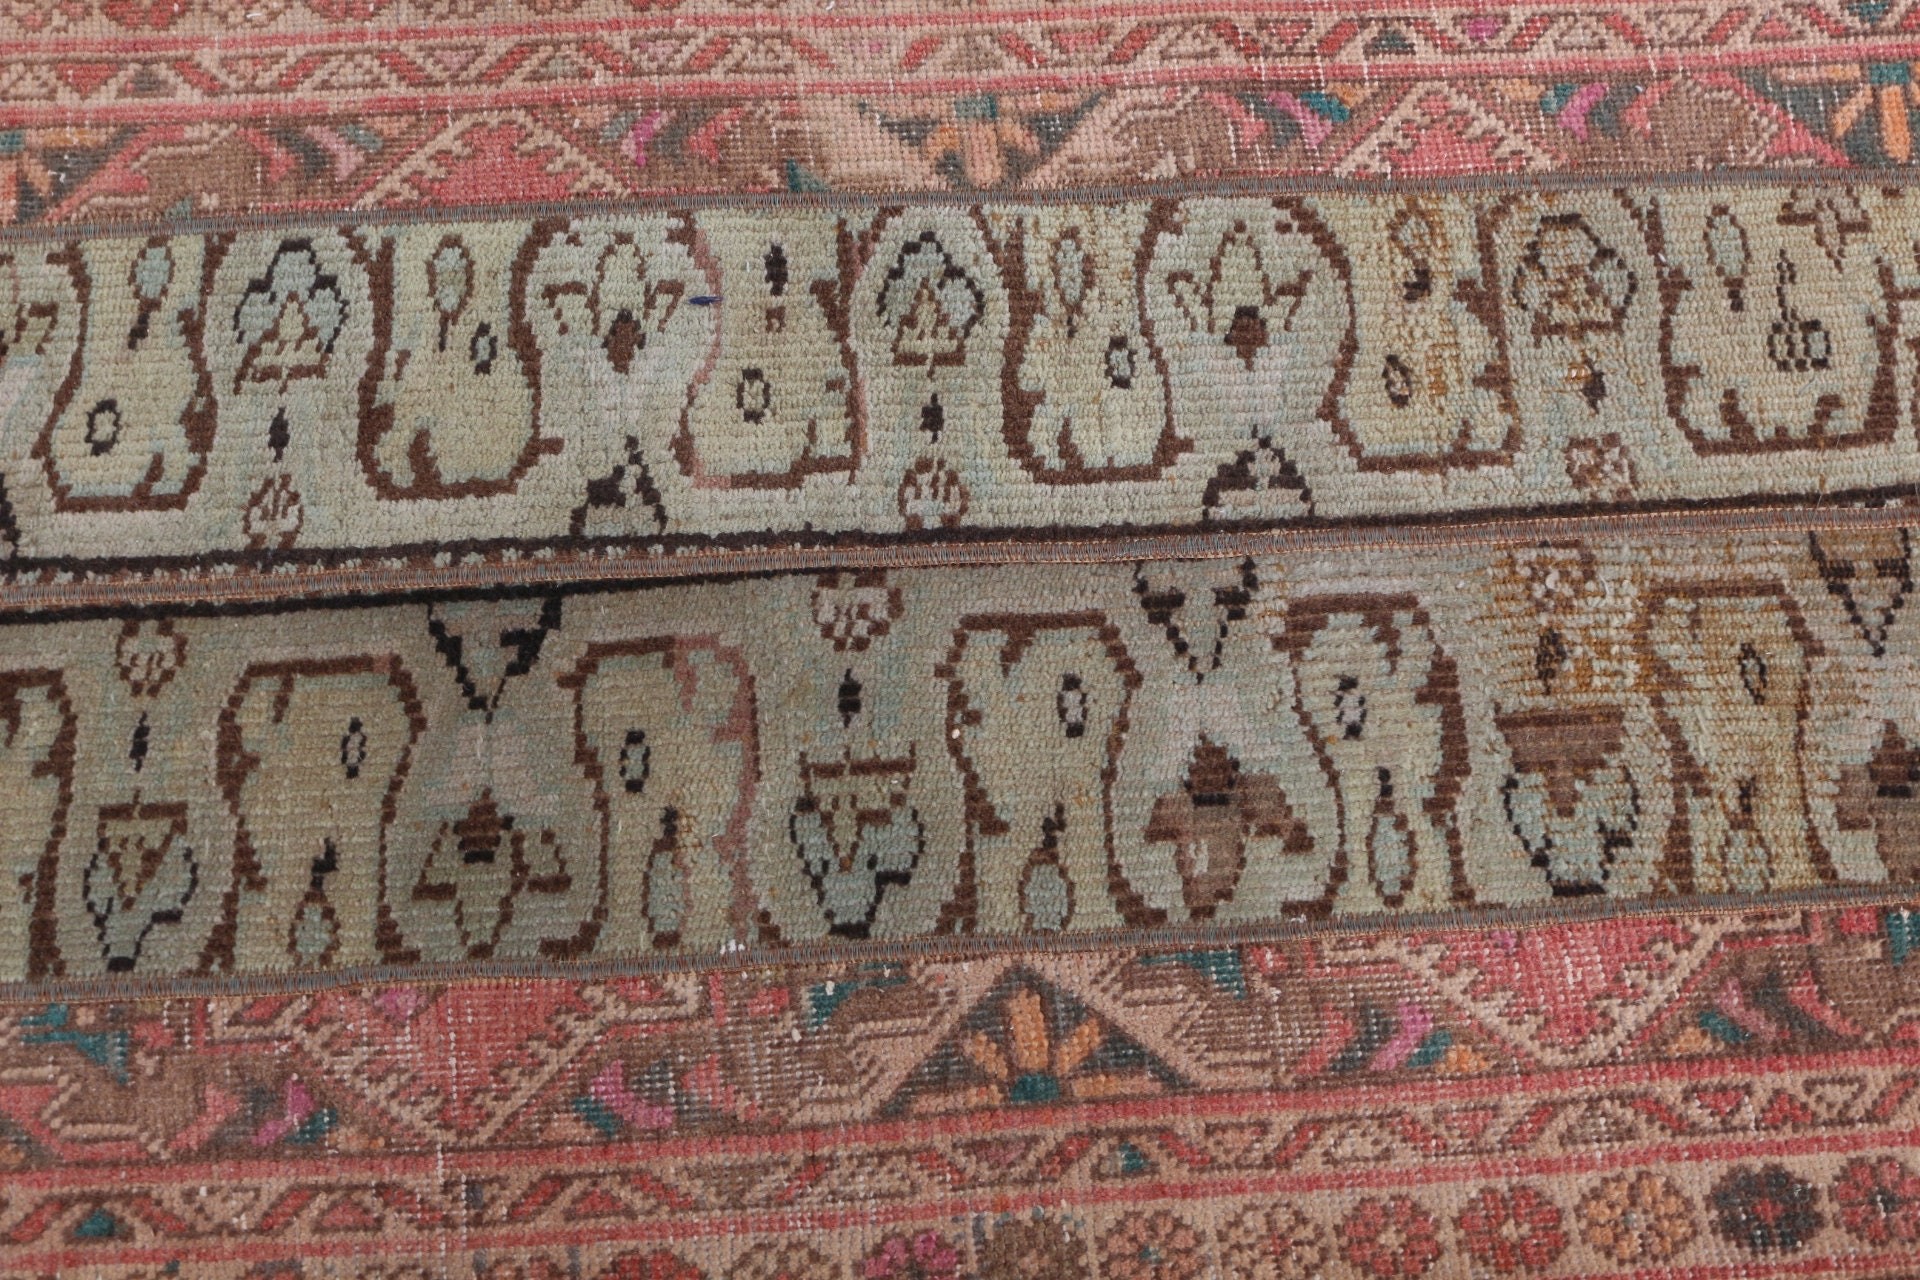 Green Bedroom Rug, Anatolian Rugs, Pale Rug, Vintage Rug, 2.4x3.6 ft Small Rug, Wall Hanging Rug, Moroccan Rug, Turkish Rugs, Kitchen Rug